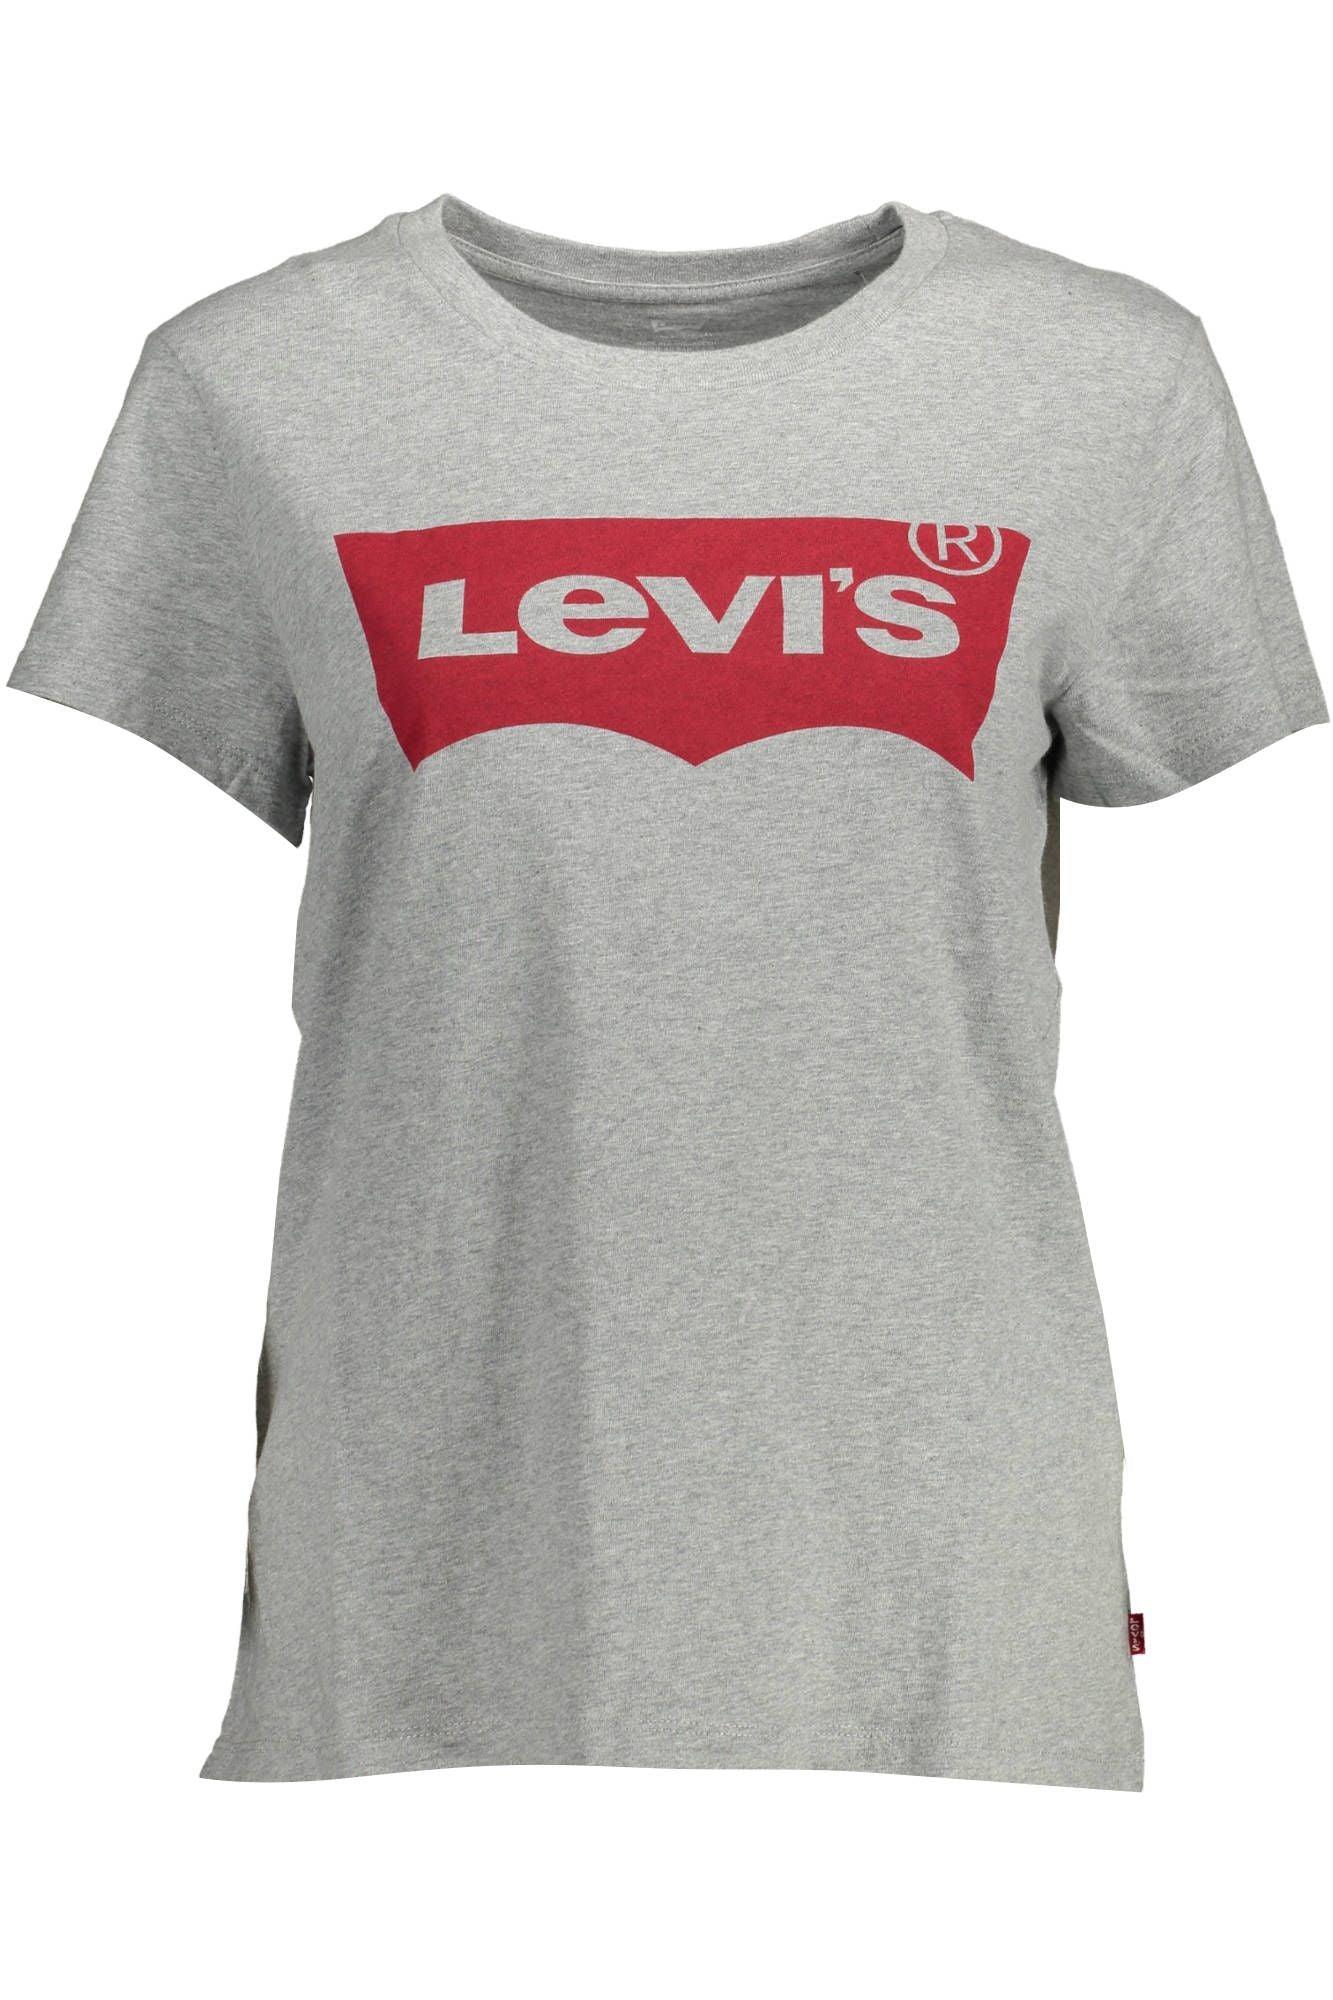 Levi's Chic Gray Logo Print Tee for Casual Elegance - PER.FASHION